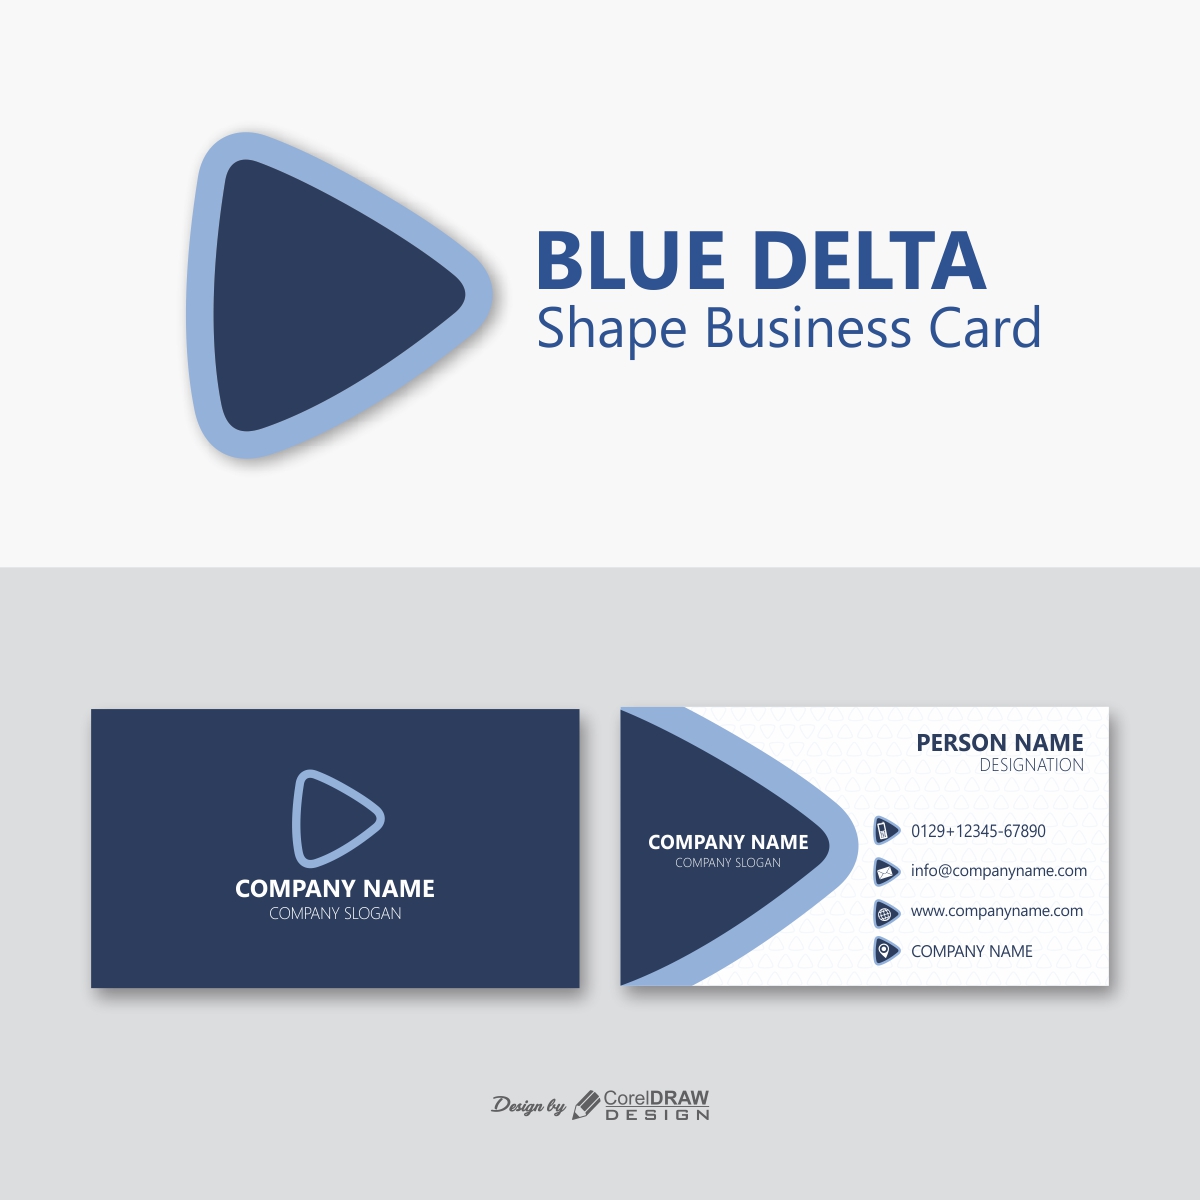 Blue Delta Shape Business Card